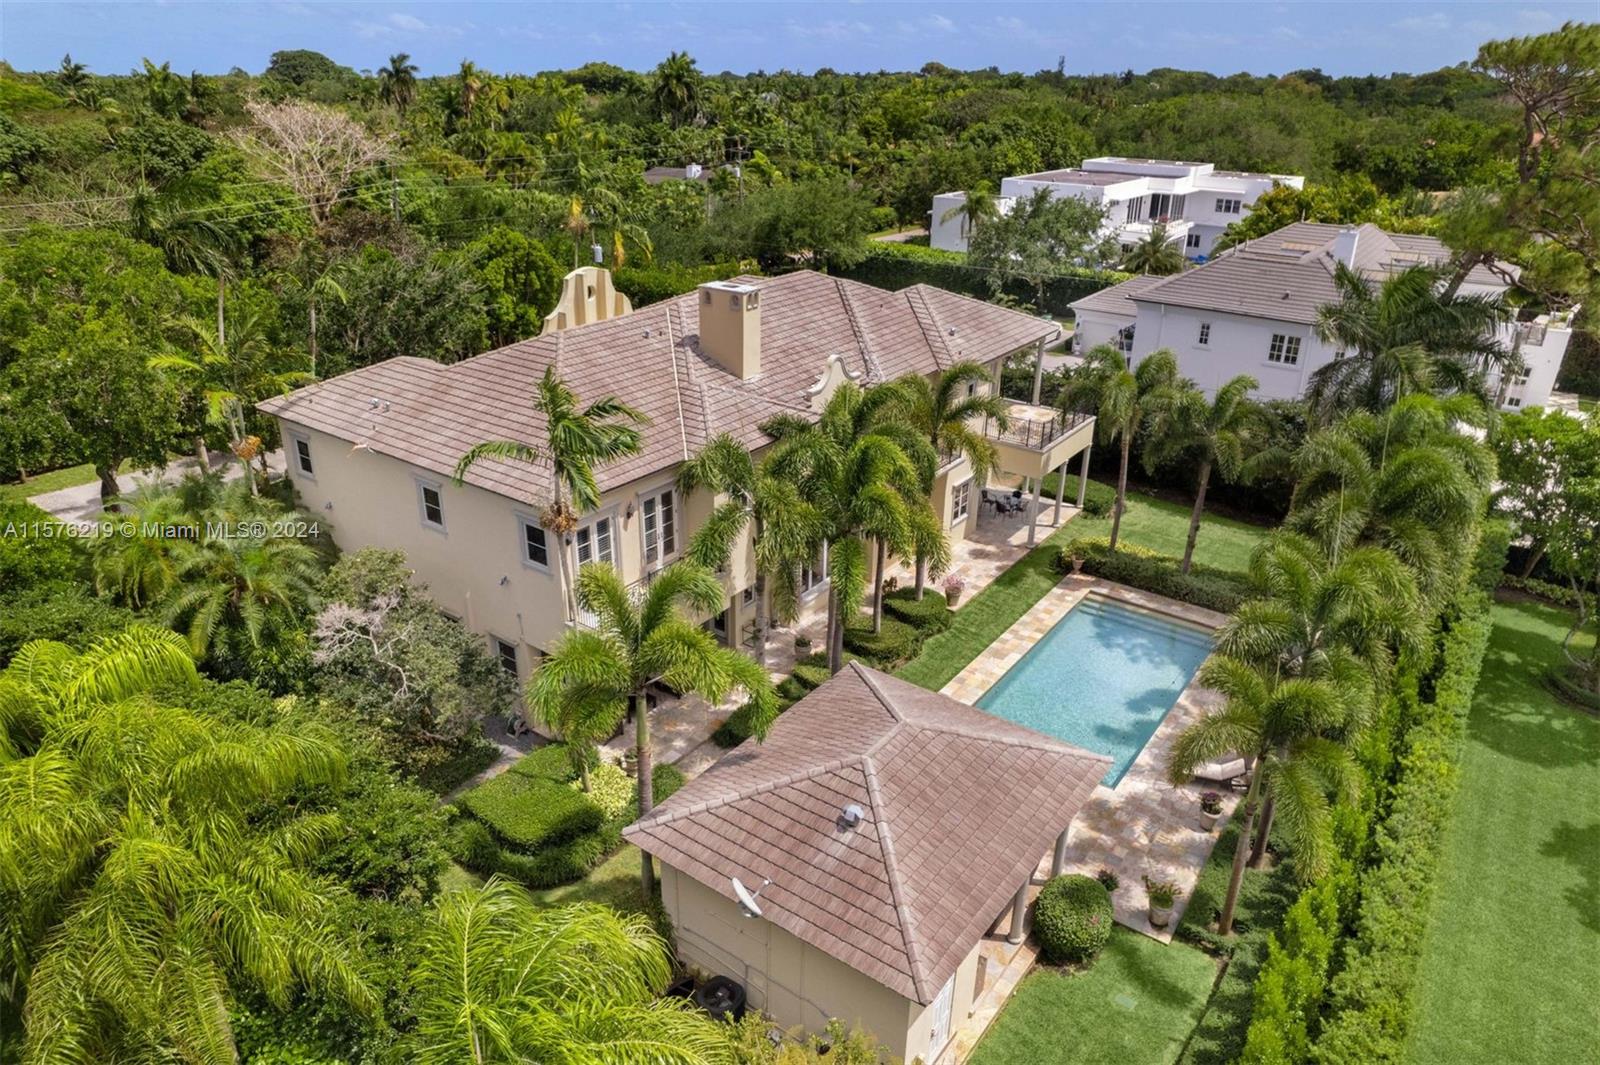 Property for Sale at 8010 Ponce De Leon Rd Rd, Miami, Broward County, Florida - Bedrooms: 7 
Bathrooms: 8  - $10,750,000